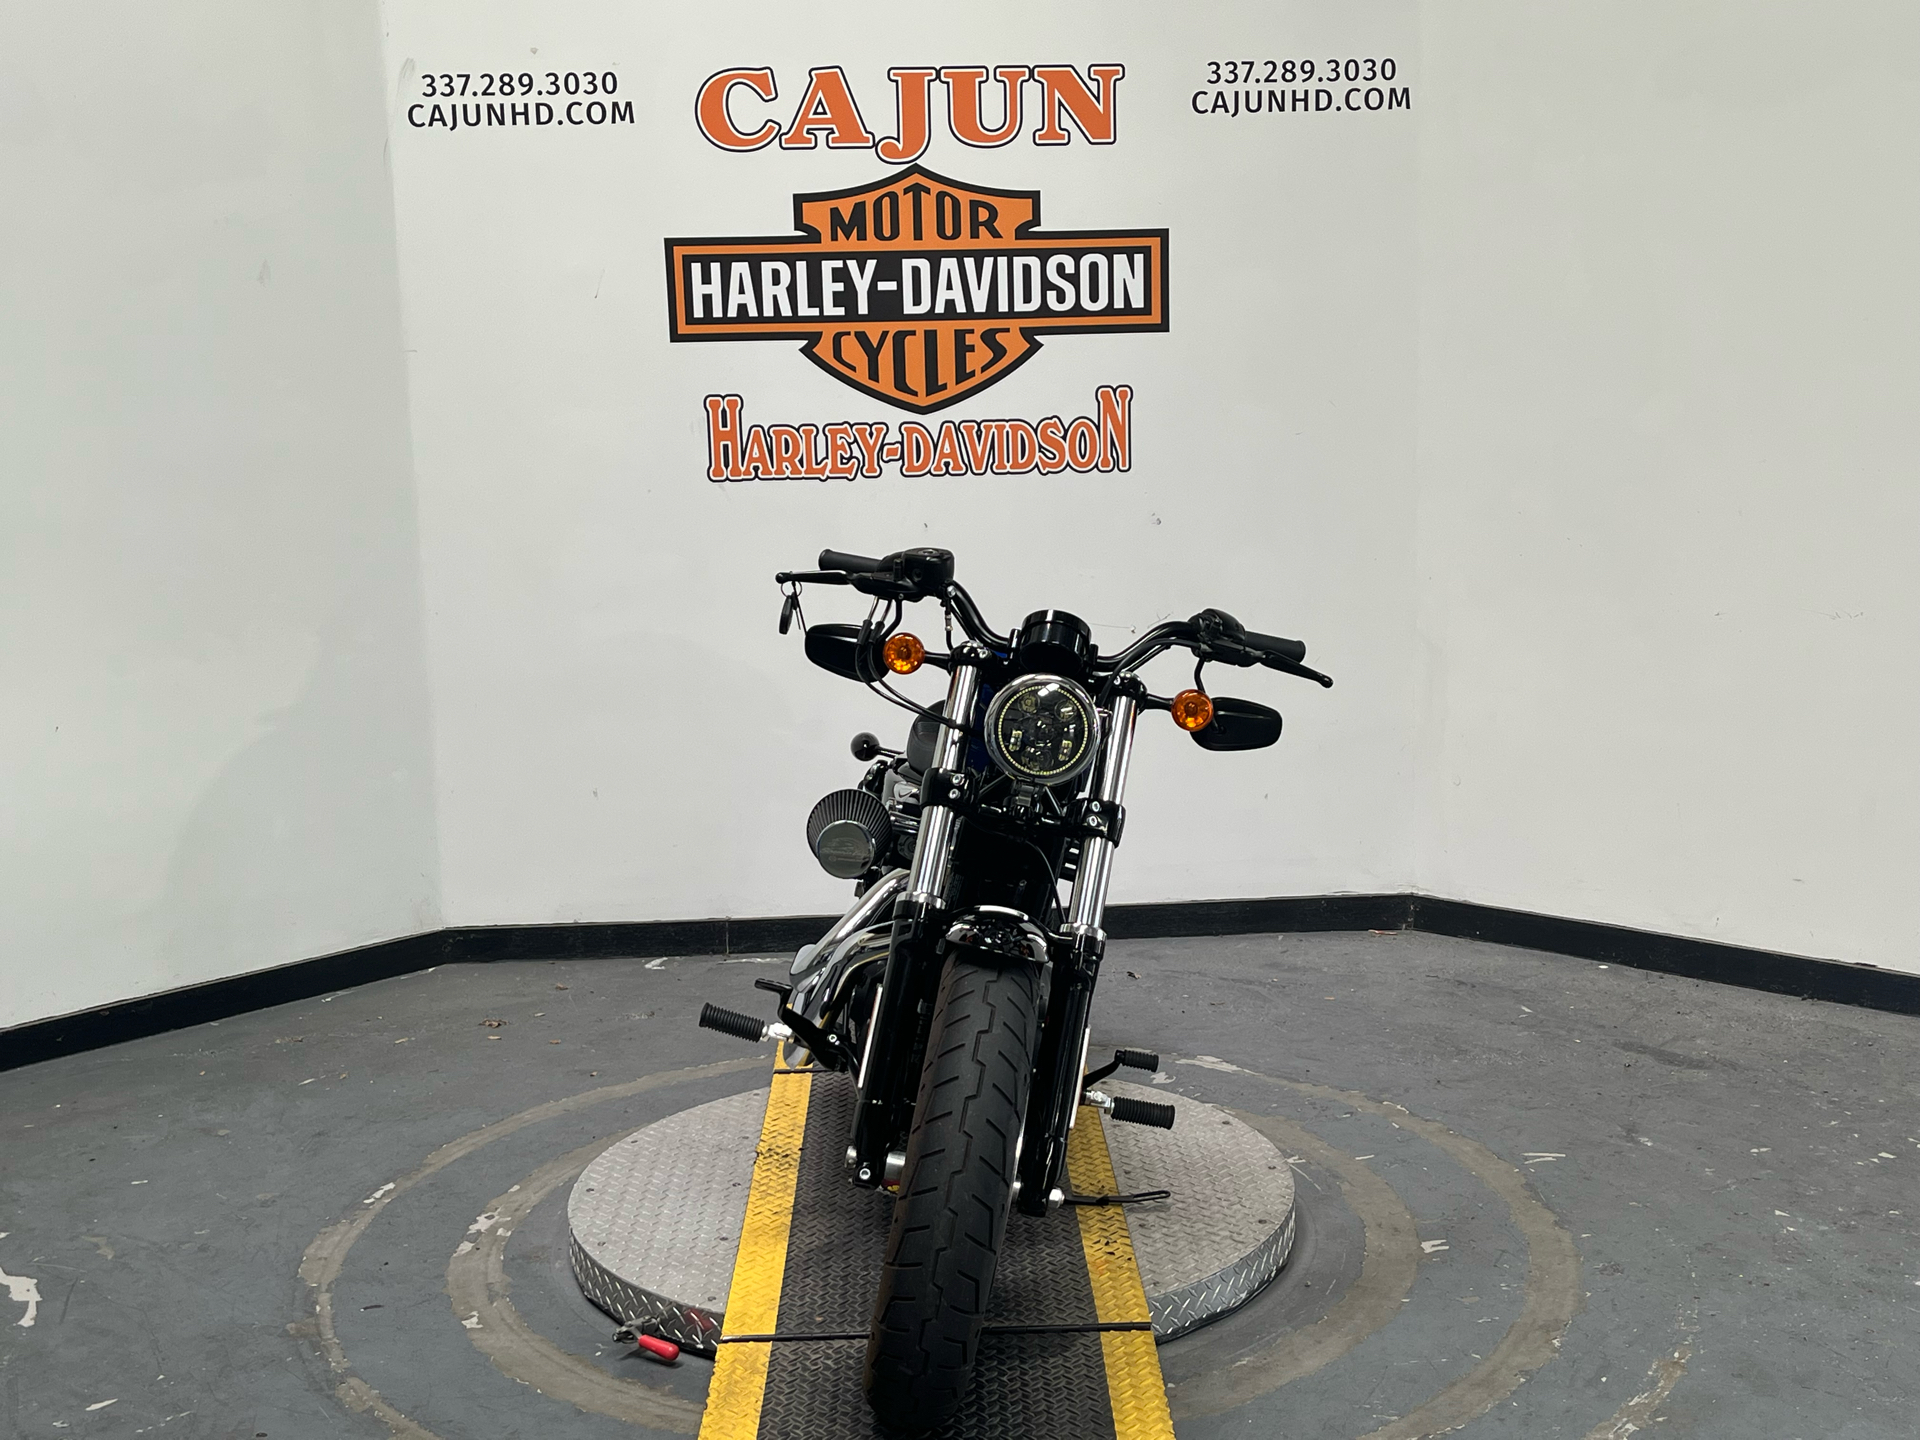 2019 Harley-Davidson Forty-Eight near me - Photo 5